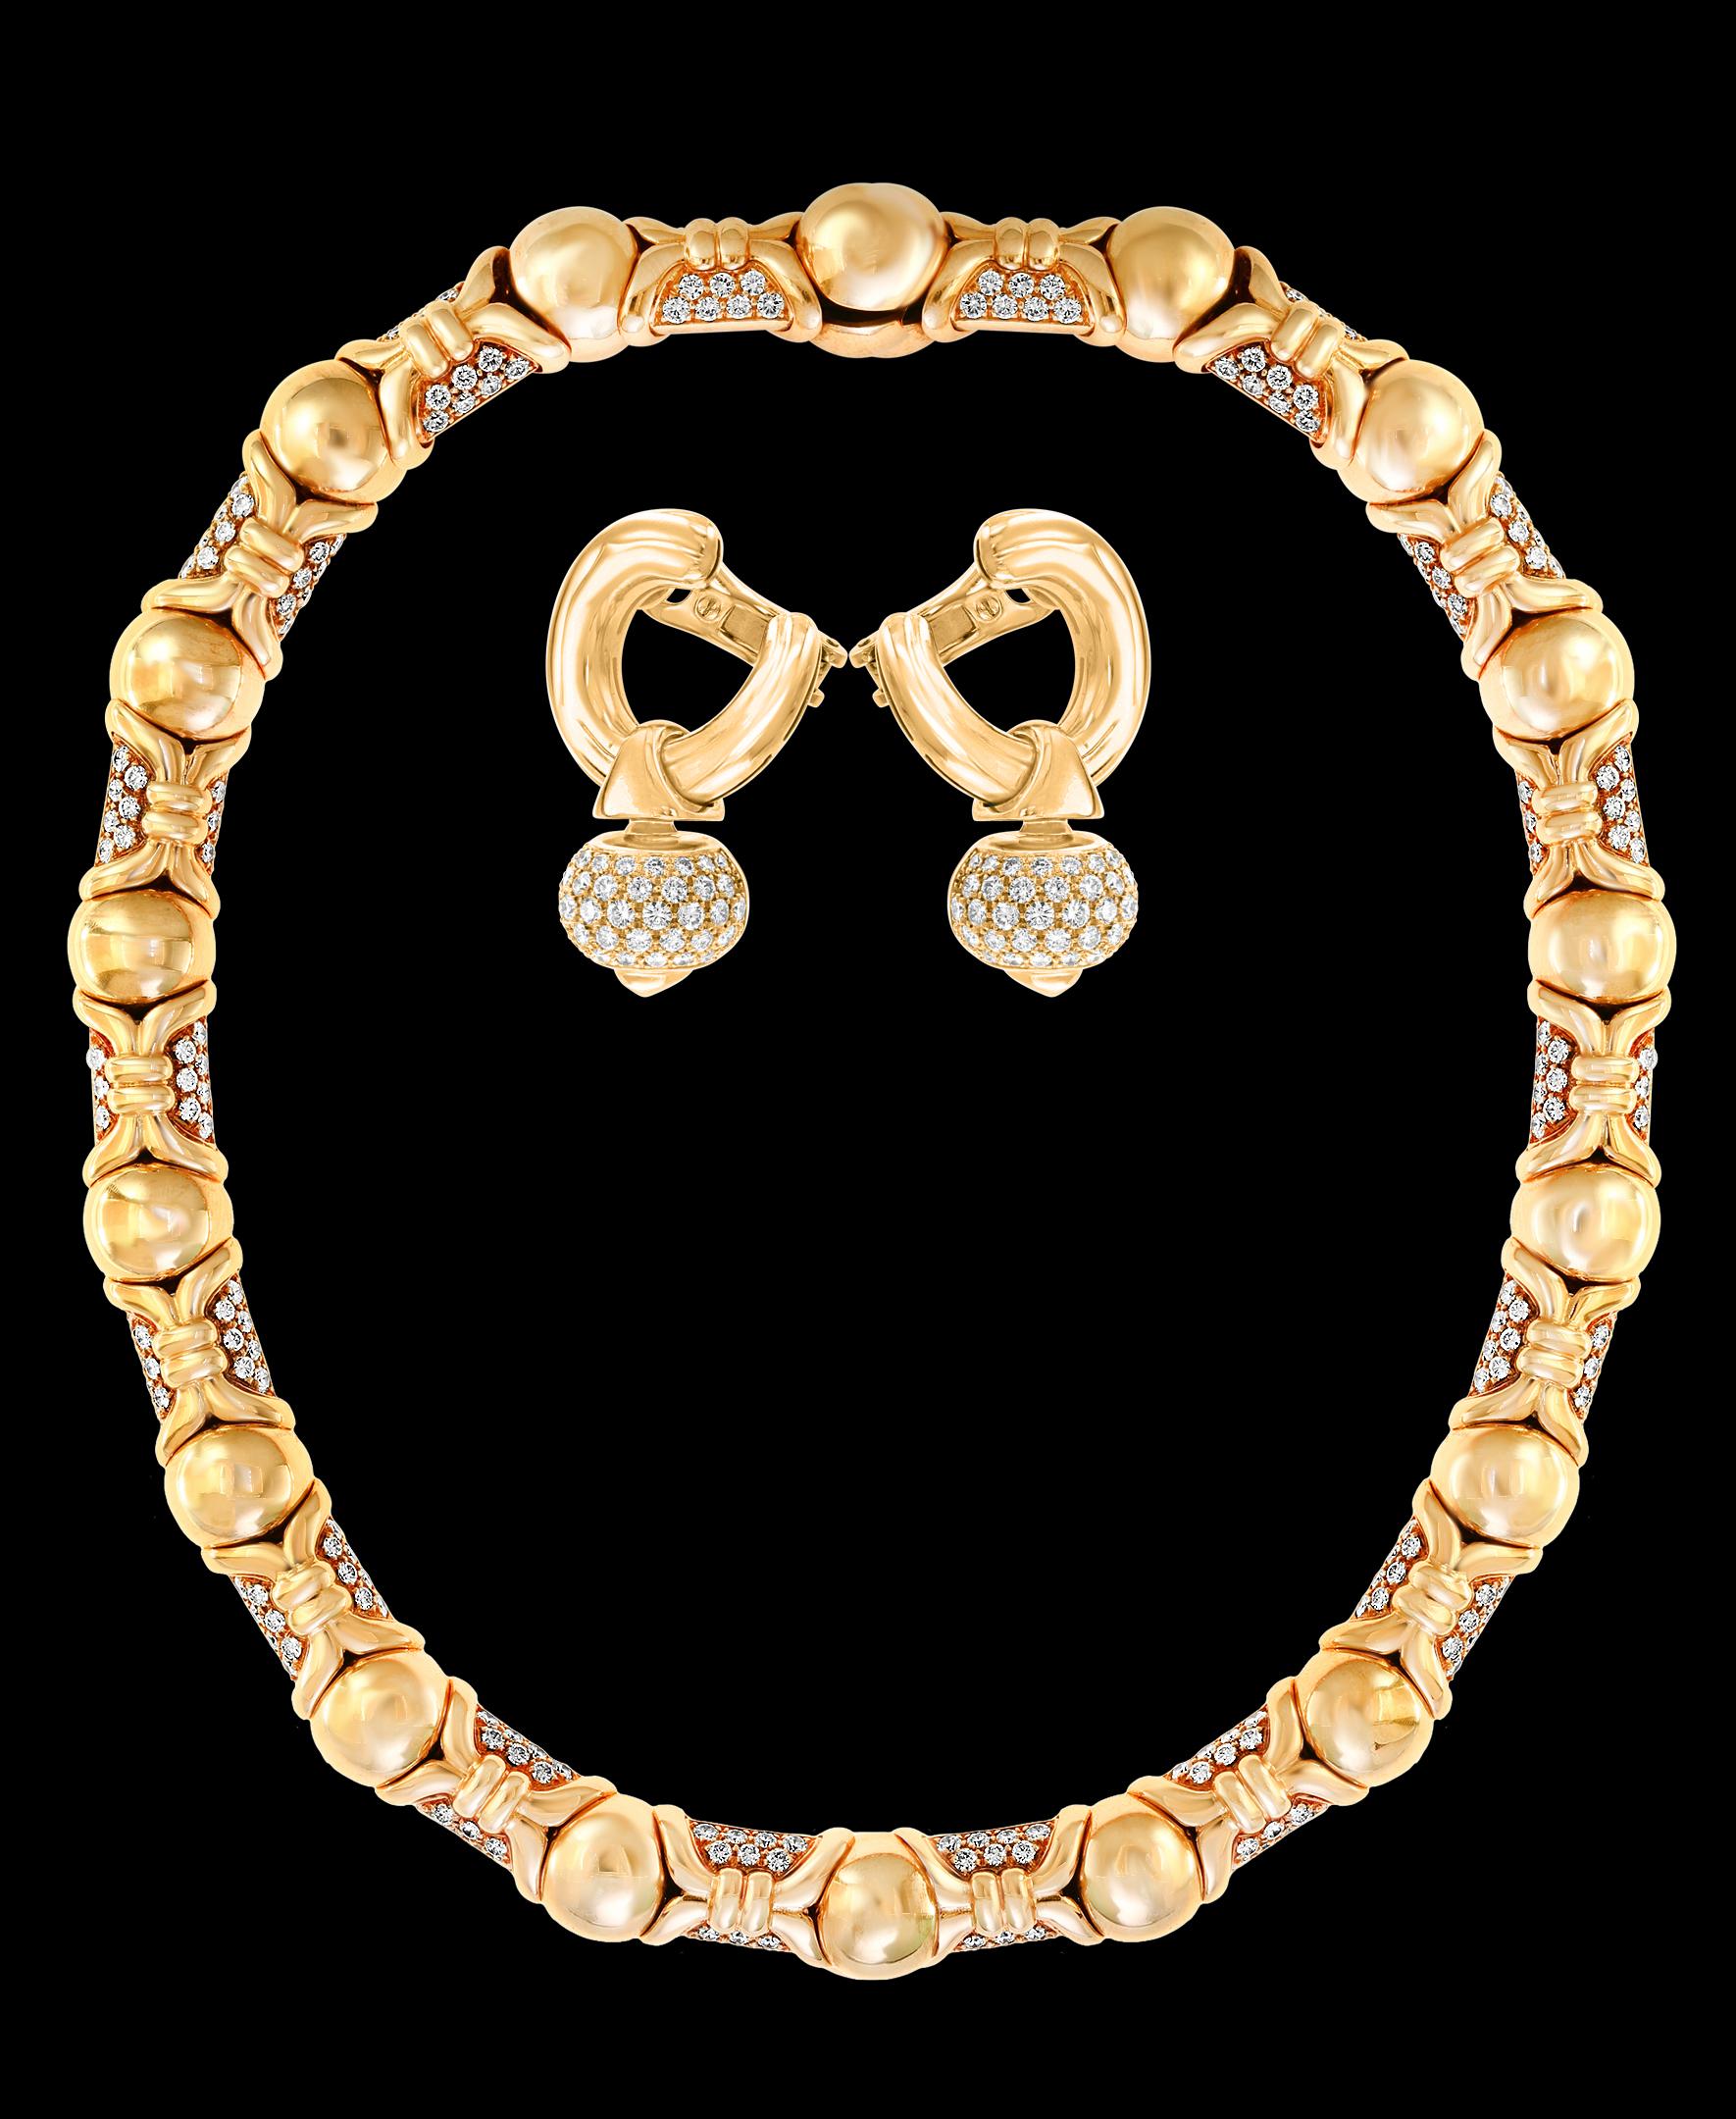 Bulgari Suite Necklace and Earrings in 18 Karat Gold and 12 Carat Diamonds 5